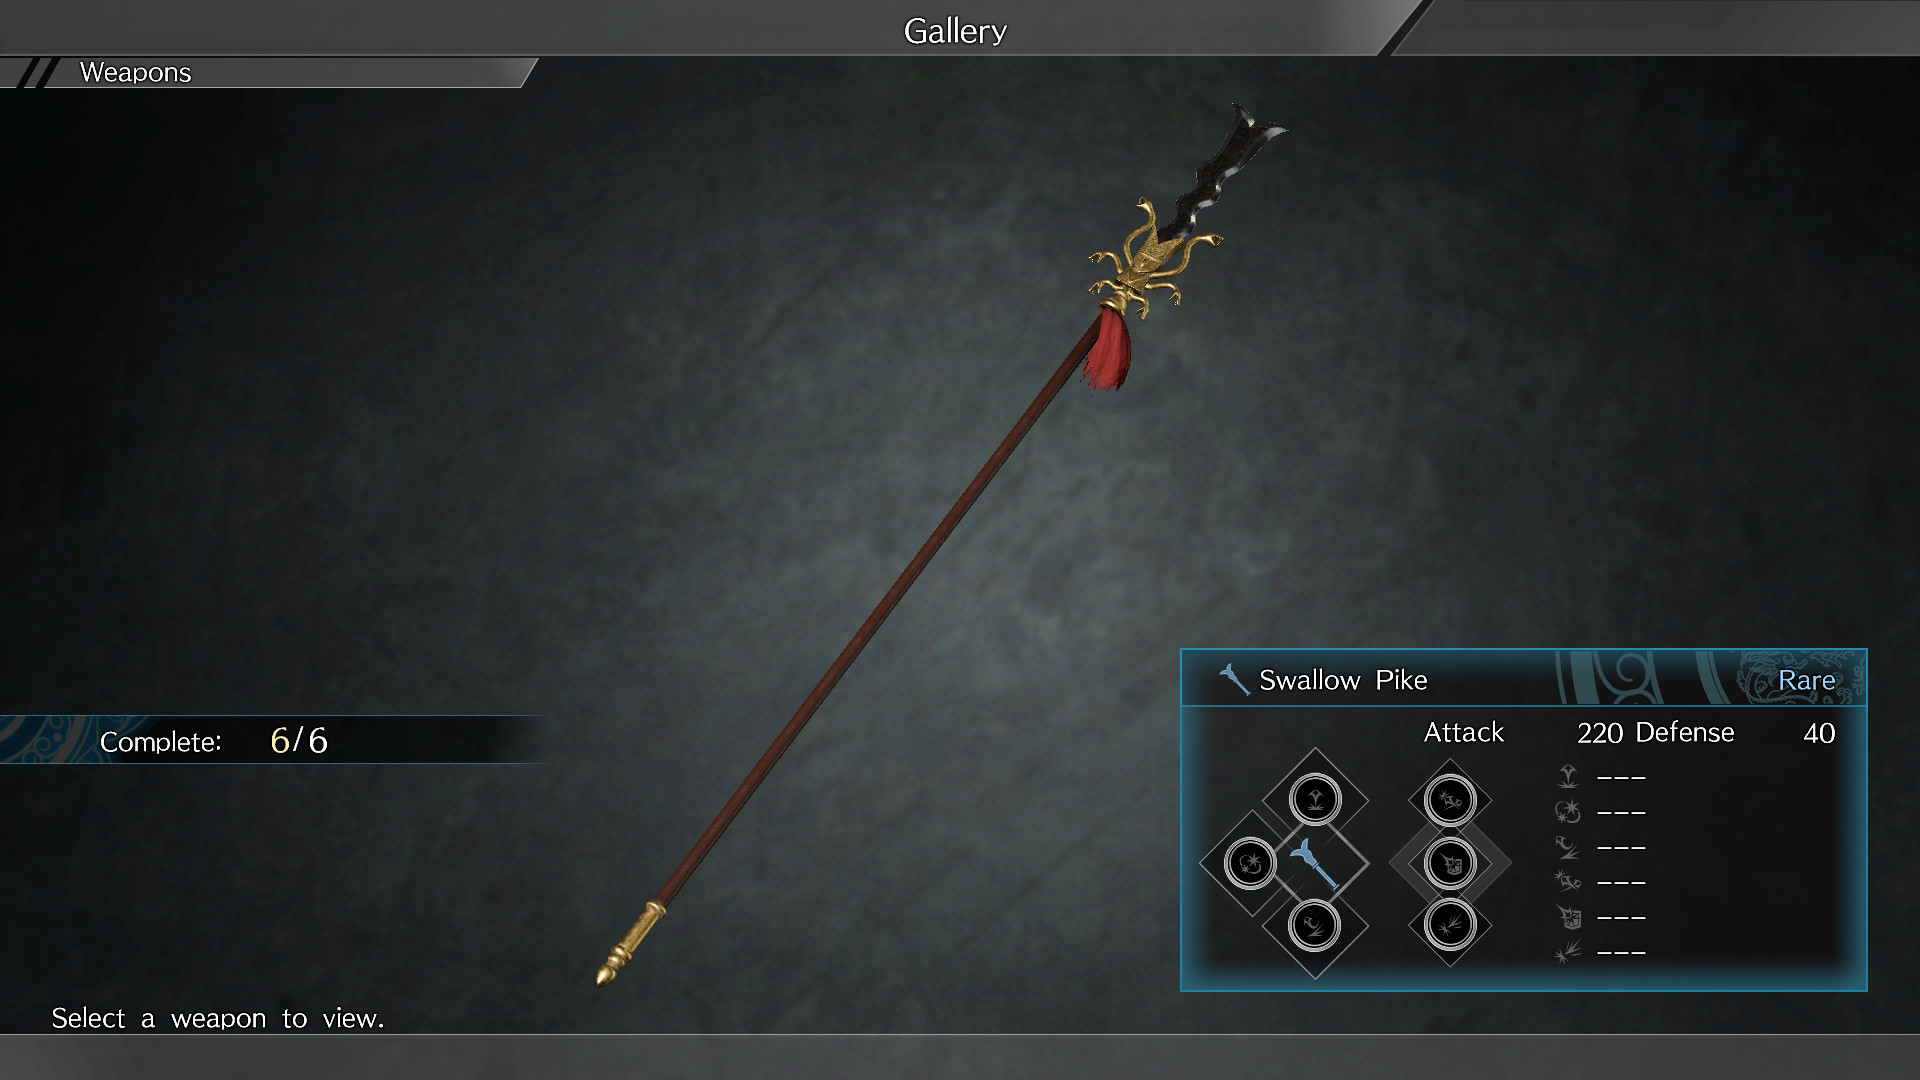 DYNASTY WARRIORS 9: Additional Weapon "Serpent Blade" / 追加武器「蛇矛」 Featured Screenshot #1